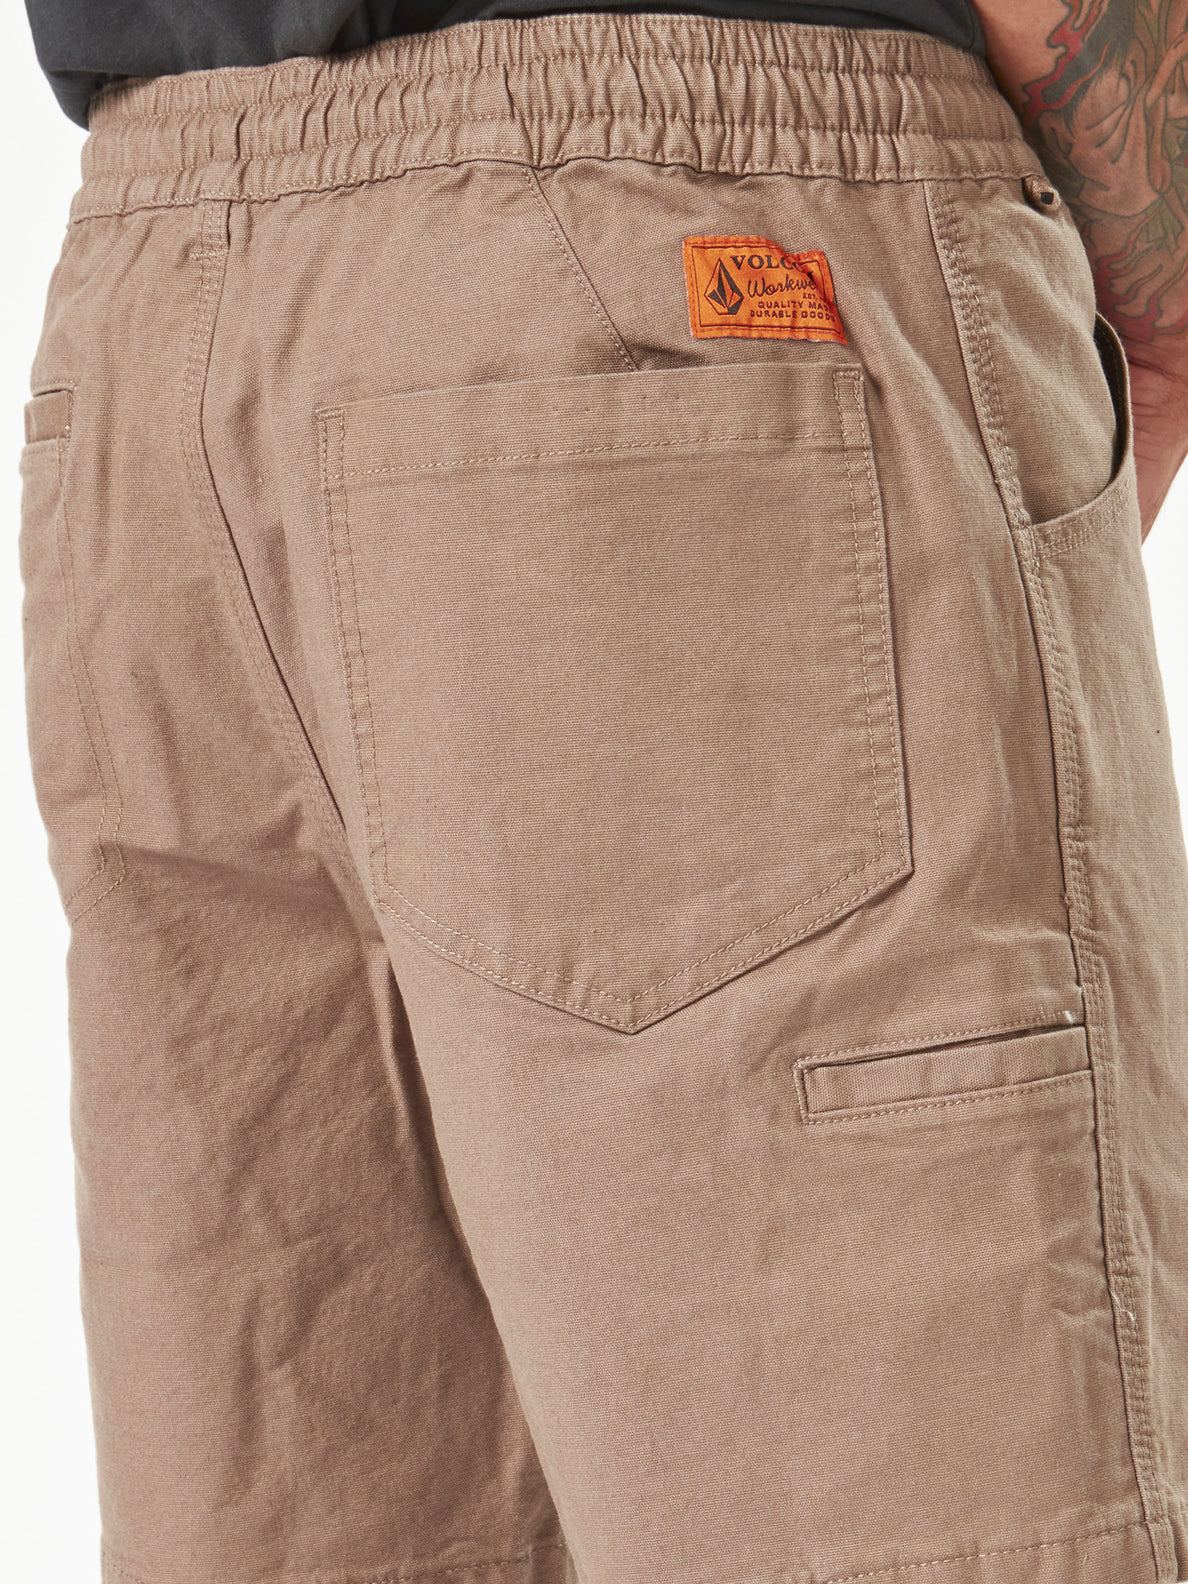 Volcom Workwear Caliper Elastic Waist Shorts - Brindle (A1002005_BNL) [5]